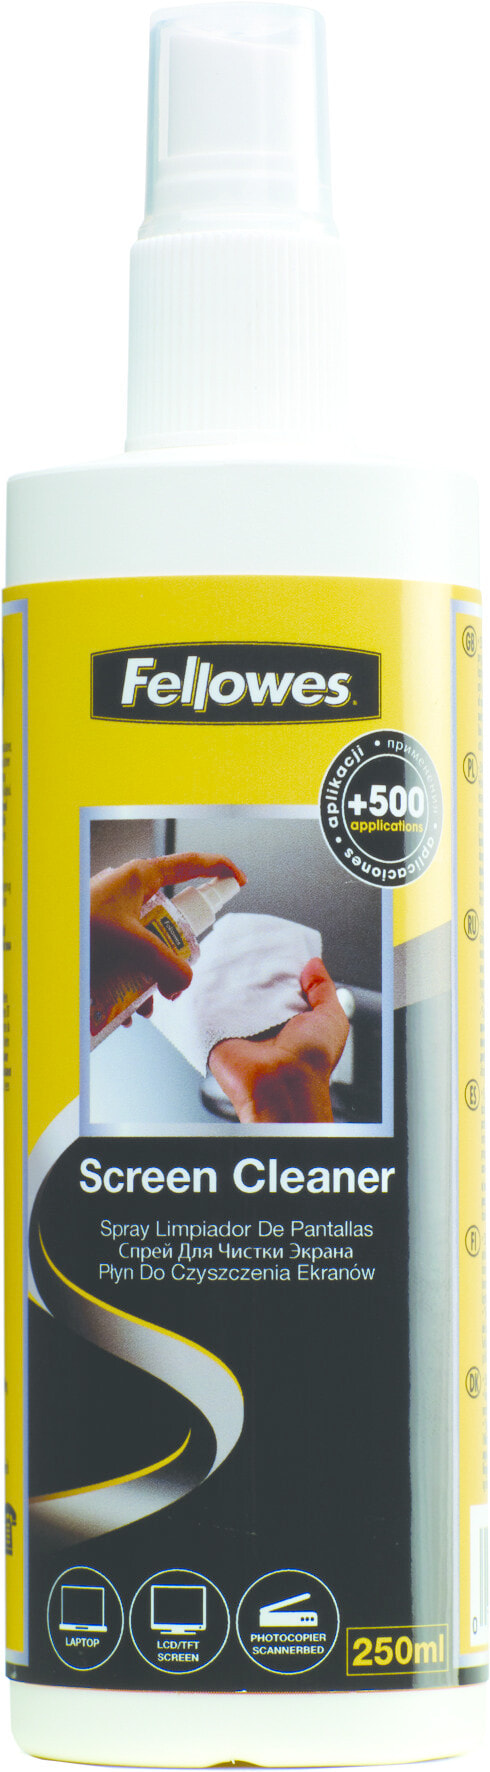 Fellowes 9971806 набор для чистки оборудования Пульверизатор для чистки оборудования ЖК/TFT/Плазма 250 ml